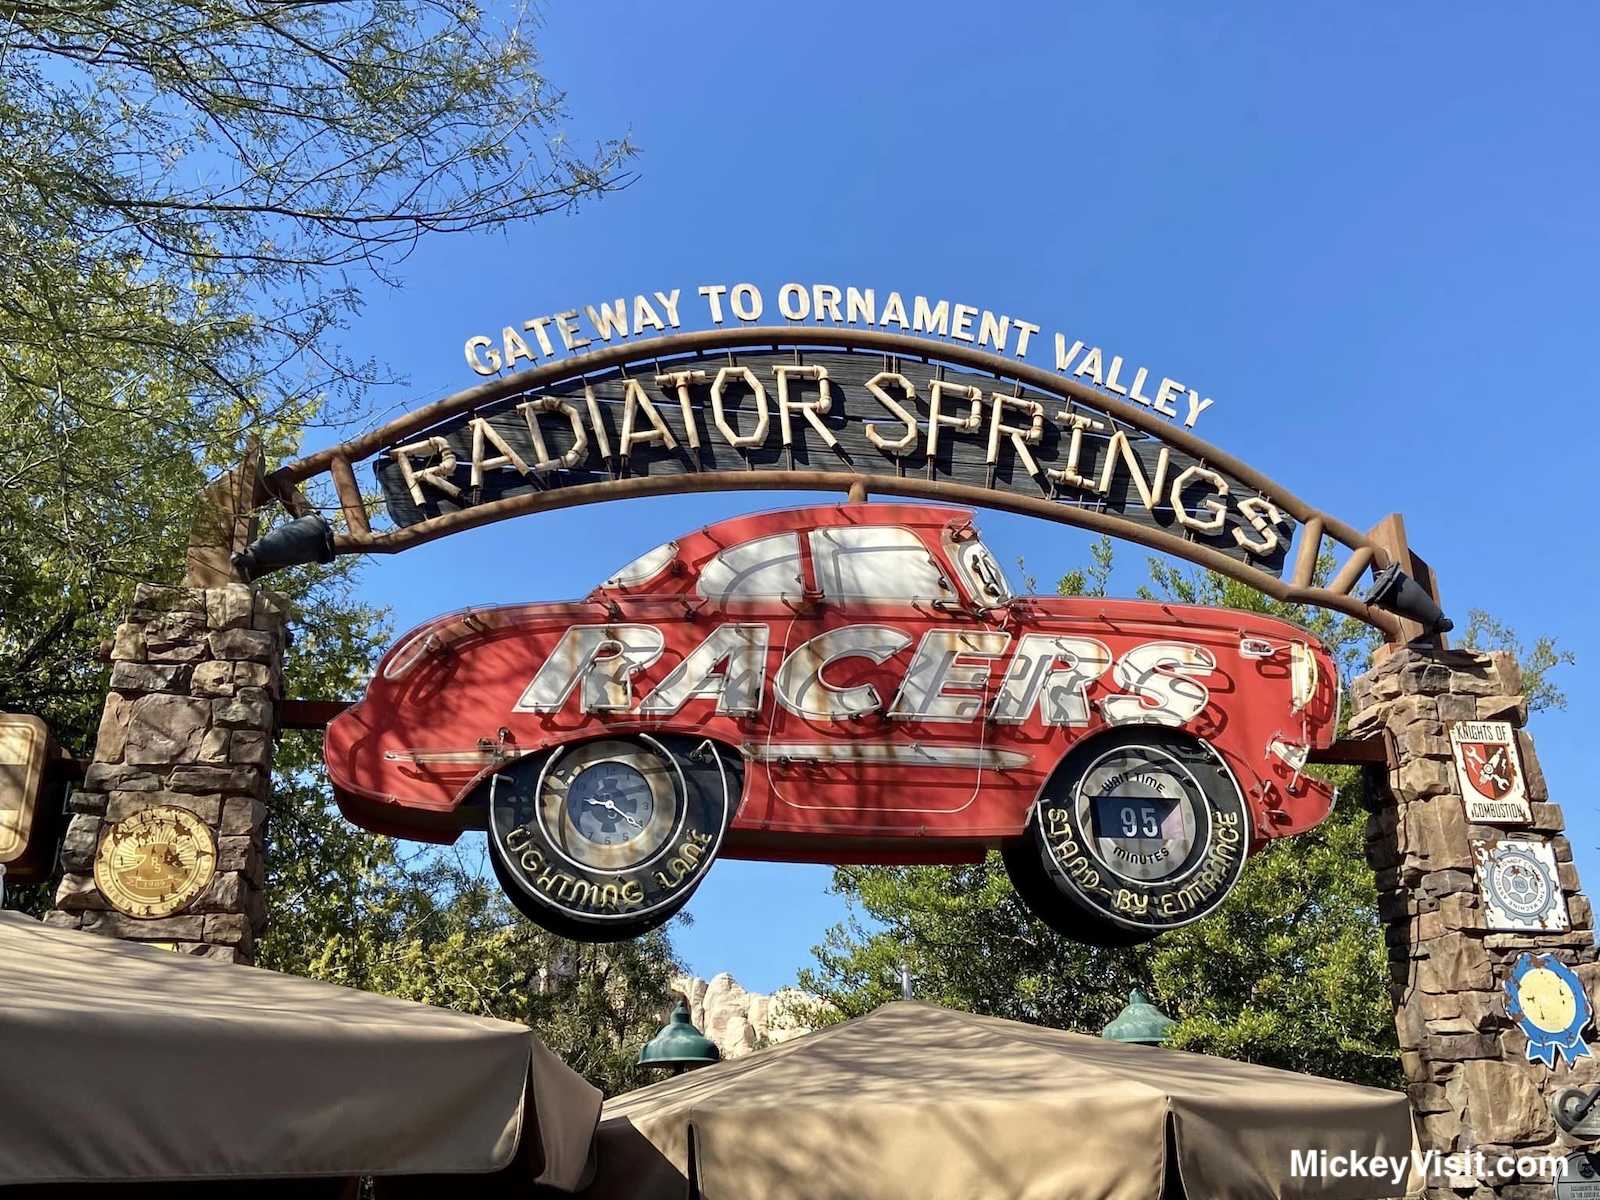 Radiator Springs Racers entrance